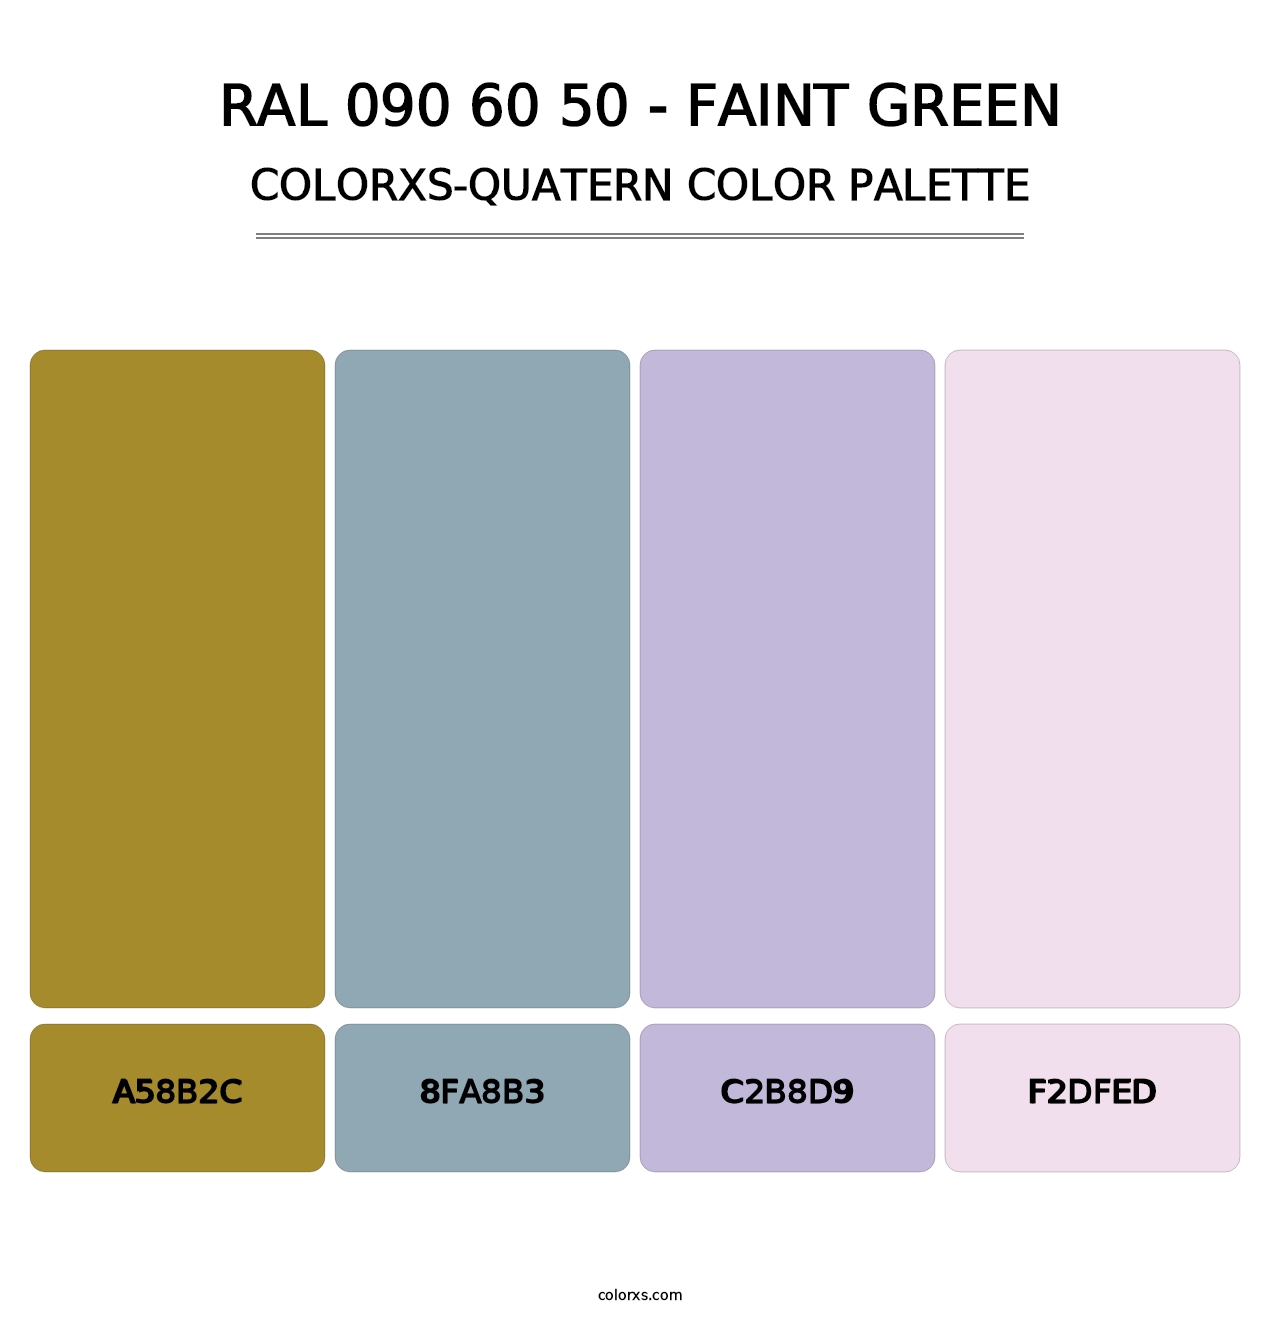 RAL 090 60 50 - Faint Green - Colorxs Quatern Palette